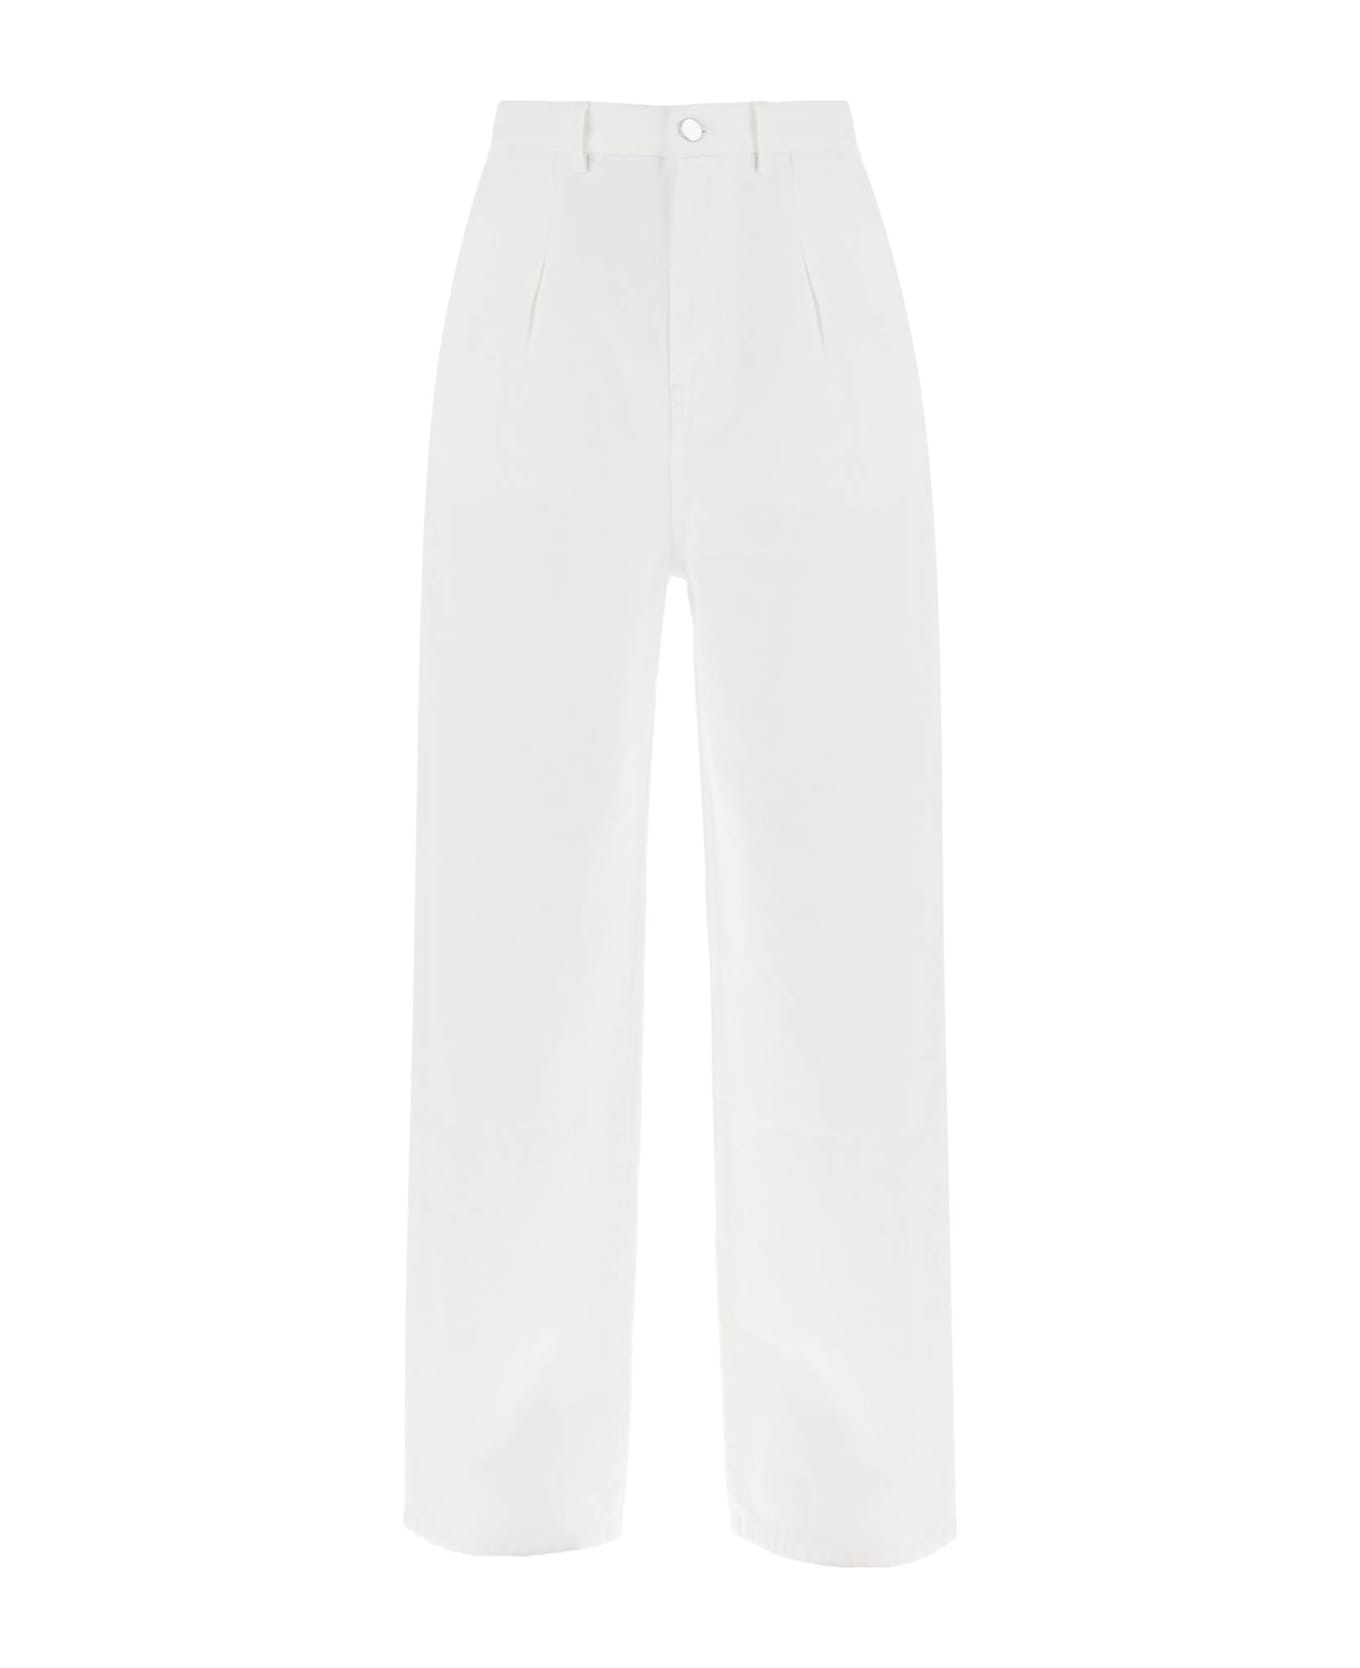 Loulou Studio Attu Oversized Jeans - IVORY (White)